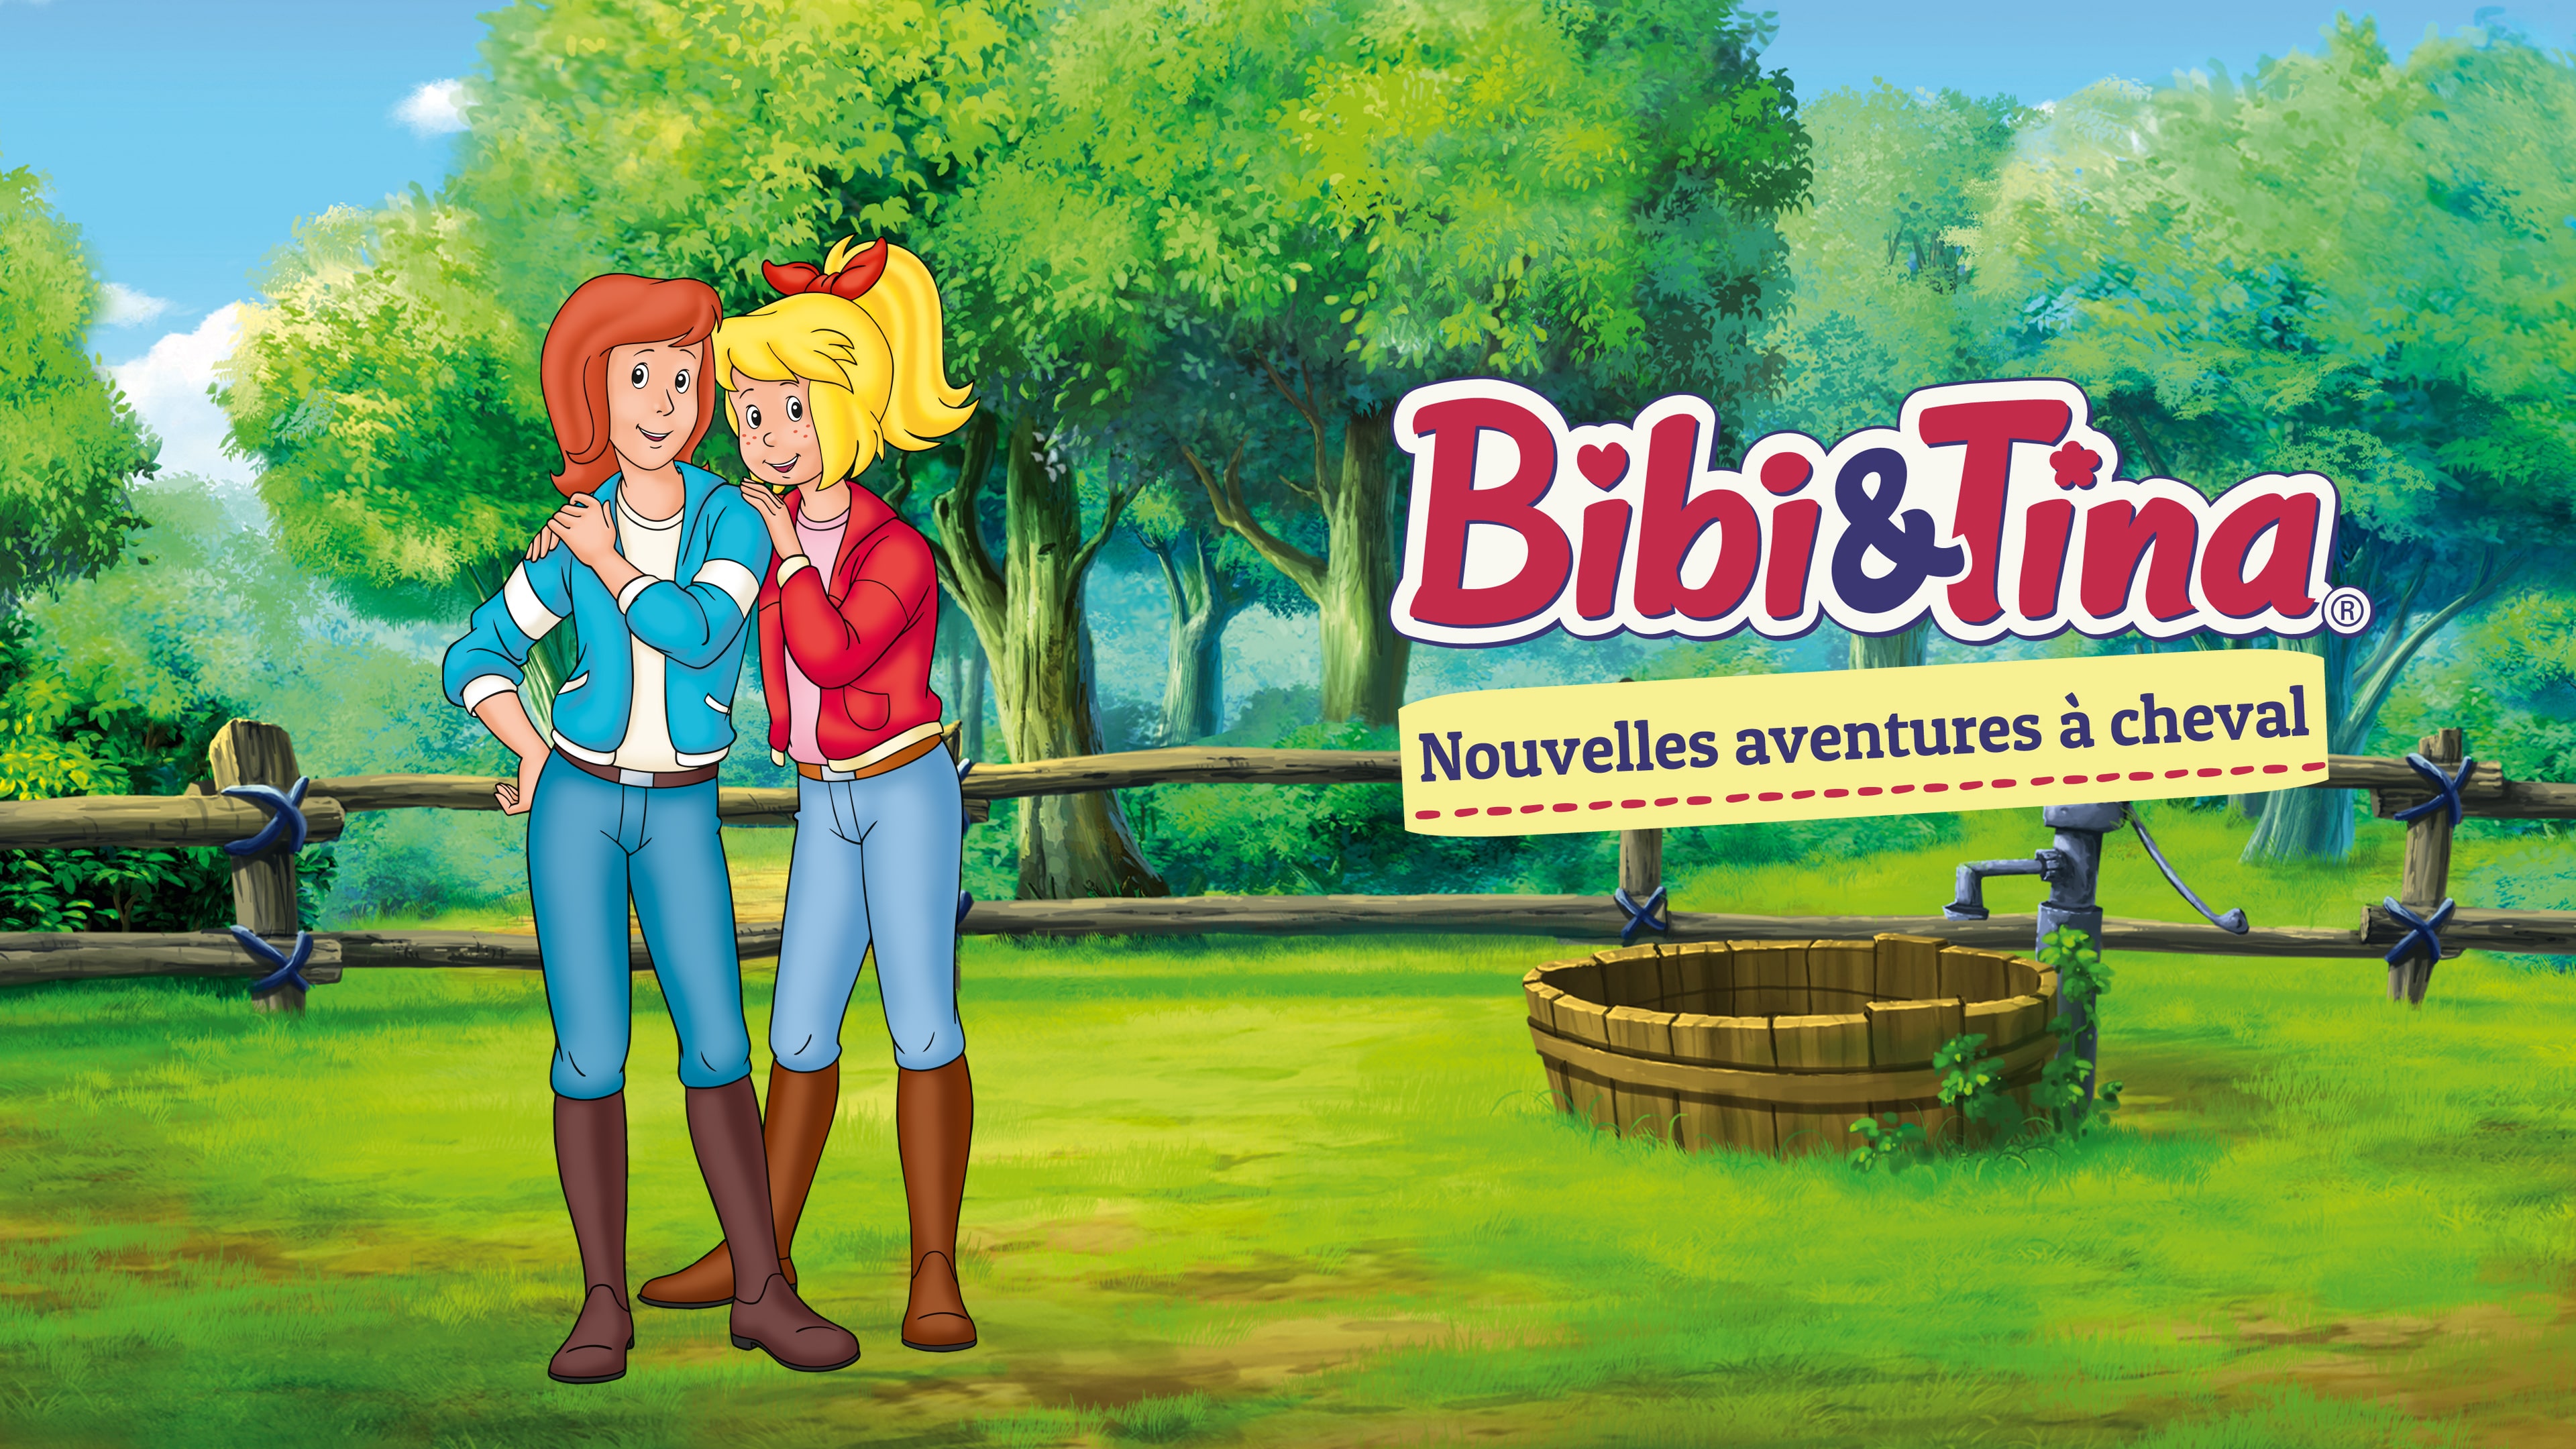 Bibi & Tina – Nouvelles aventures à cheval